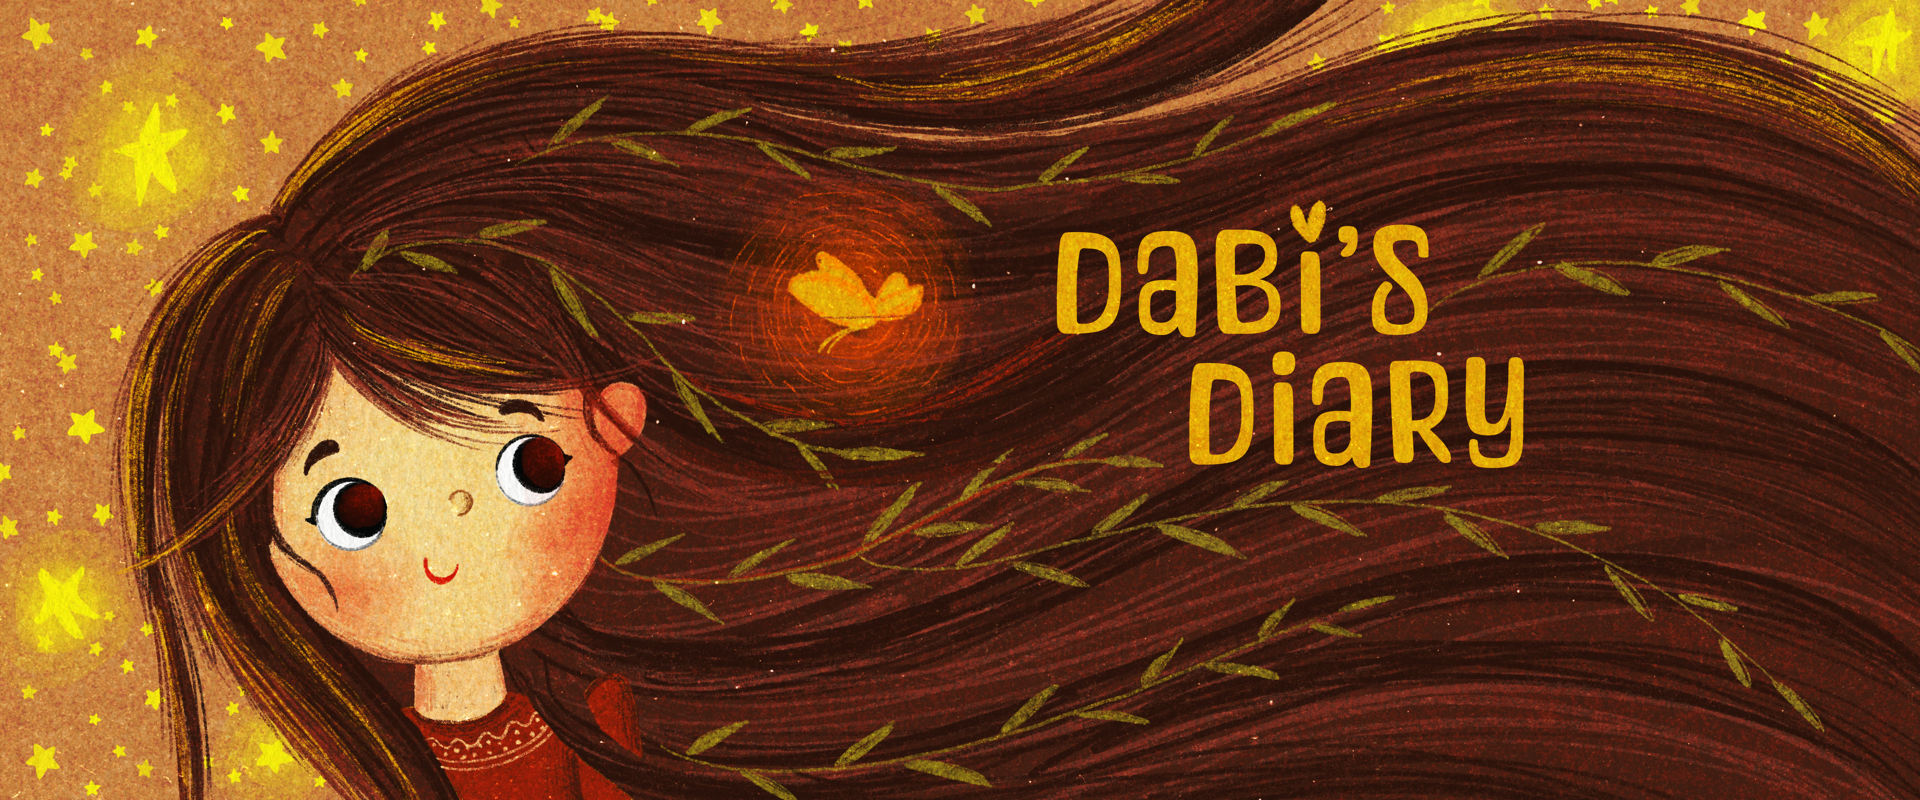 Dabis Diary